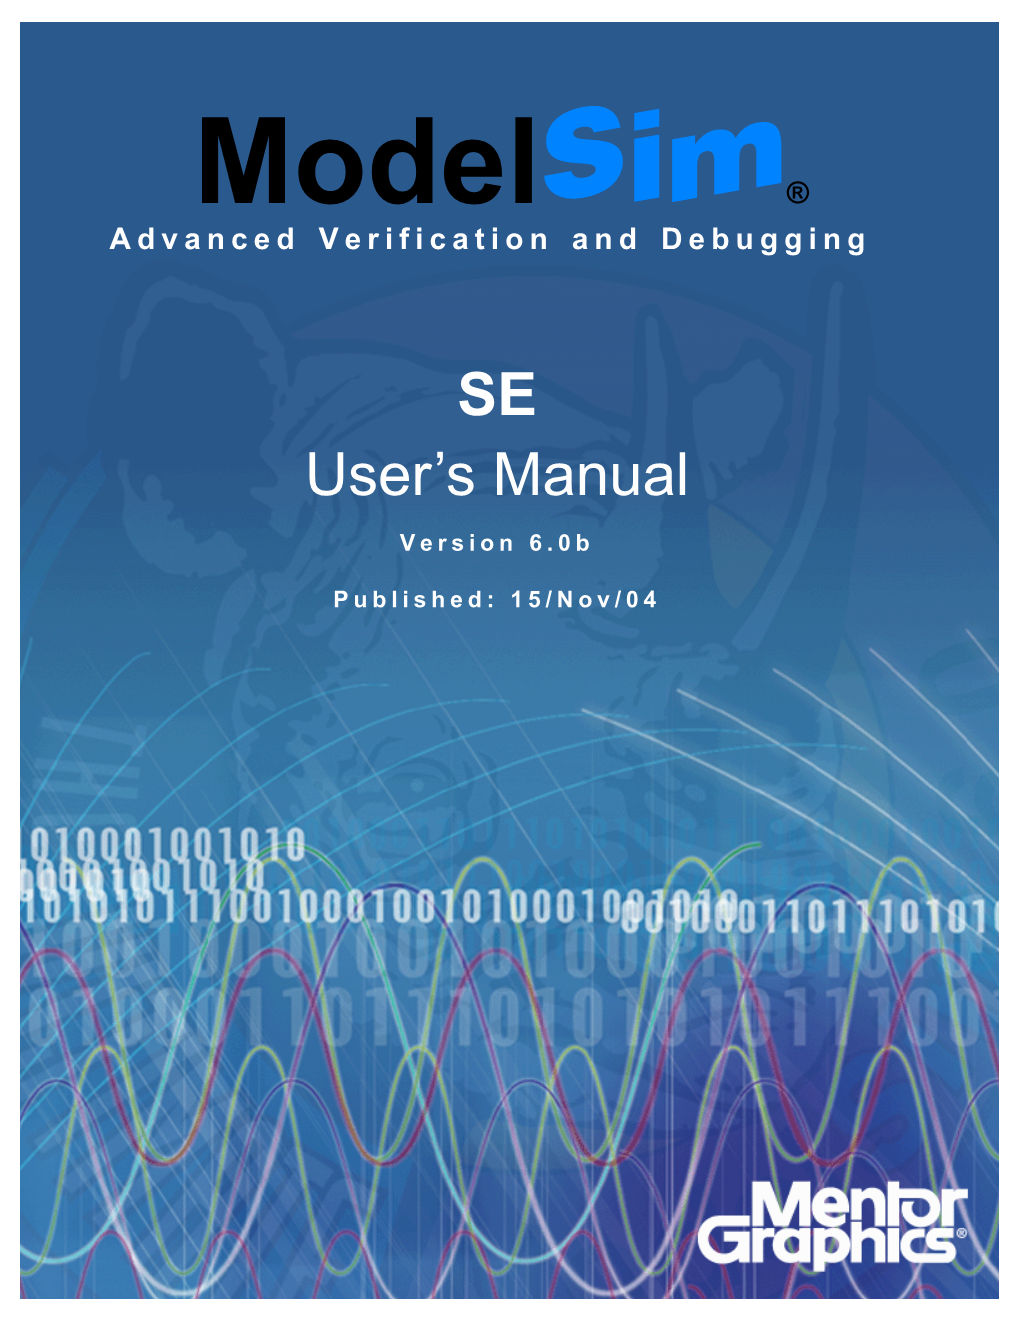 Modelsim SE User's Manual